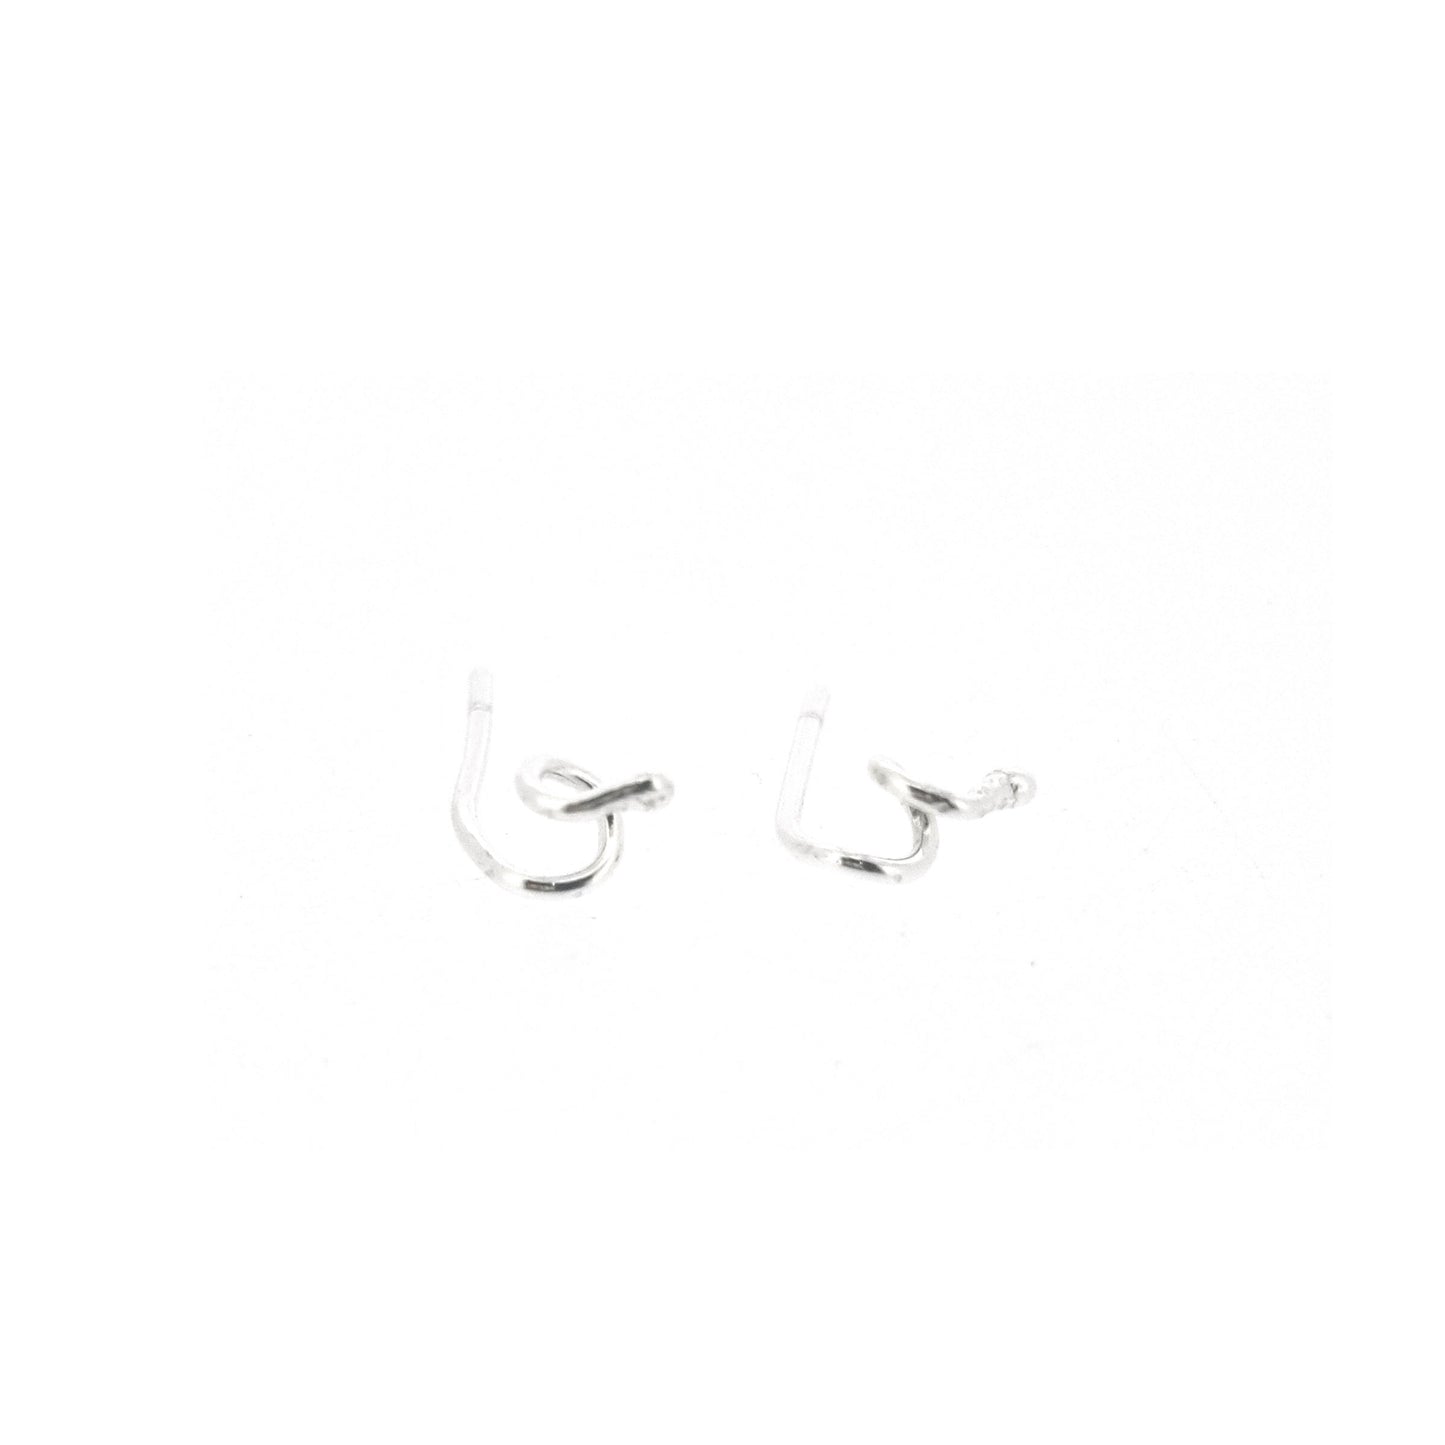 Sterling silver spiral stud earrings